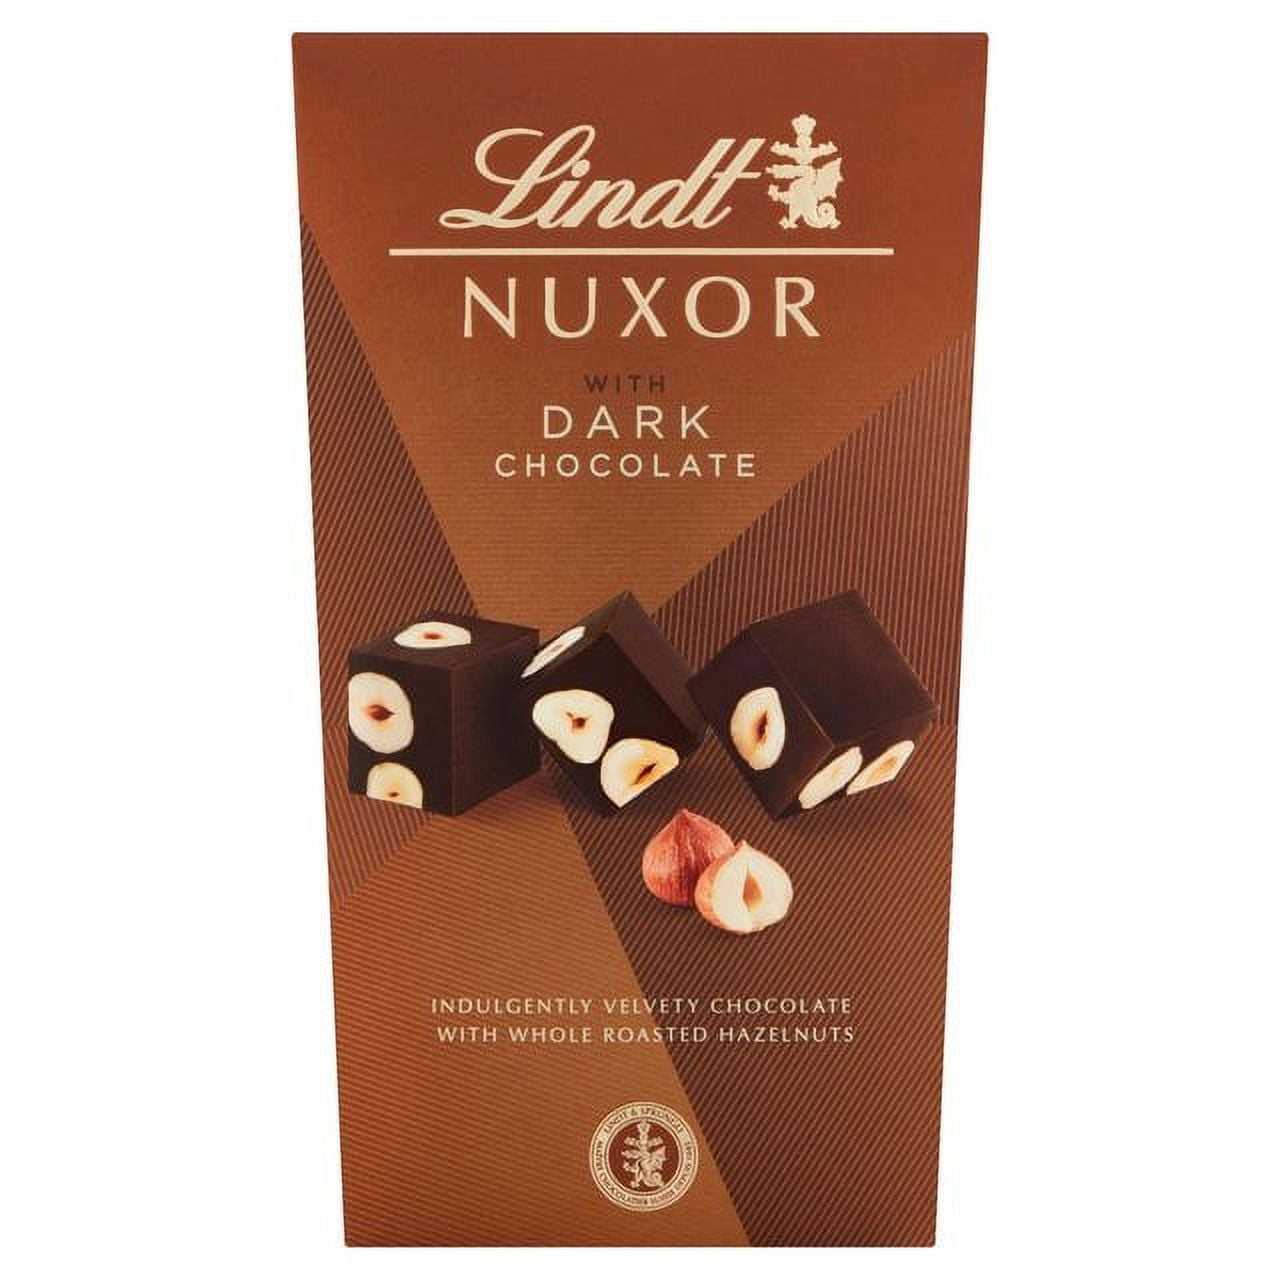 Lindt Nuxor Gianduja – Chocolate & More Delights